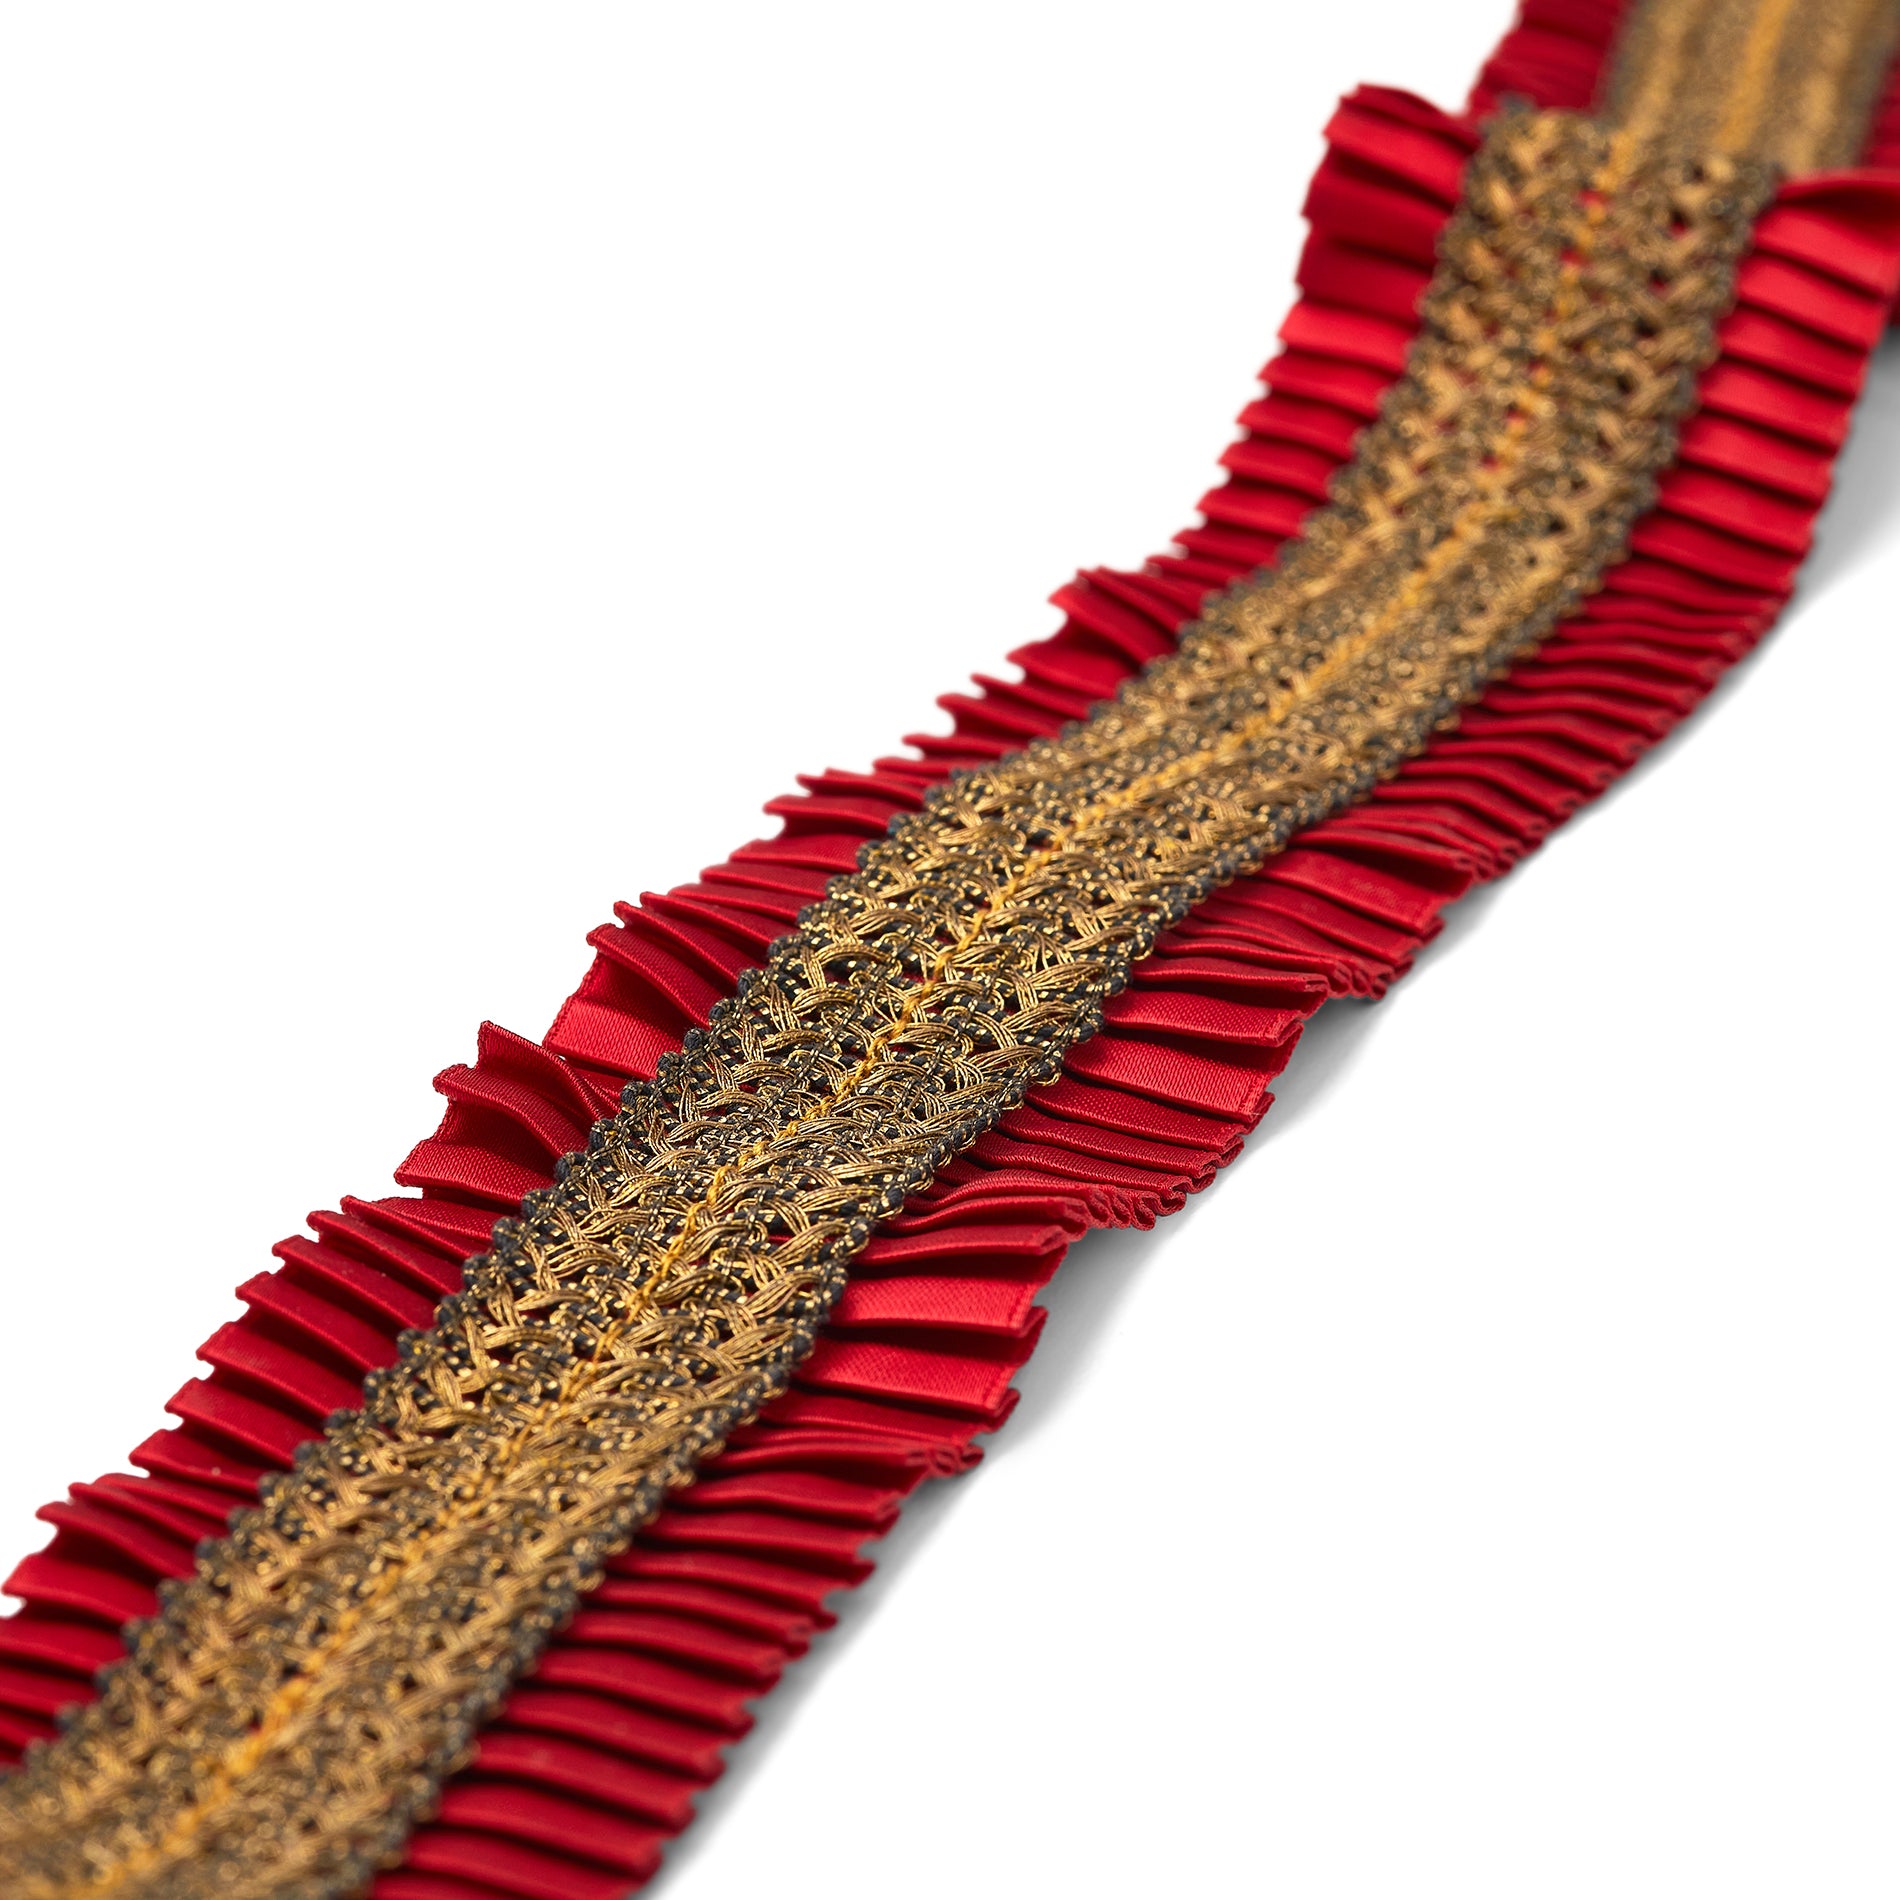 1970s Ungaro Accordion Pleat Red Ribbon Belt